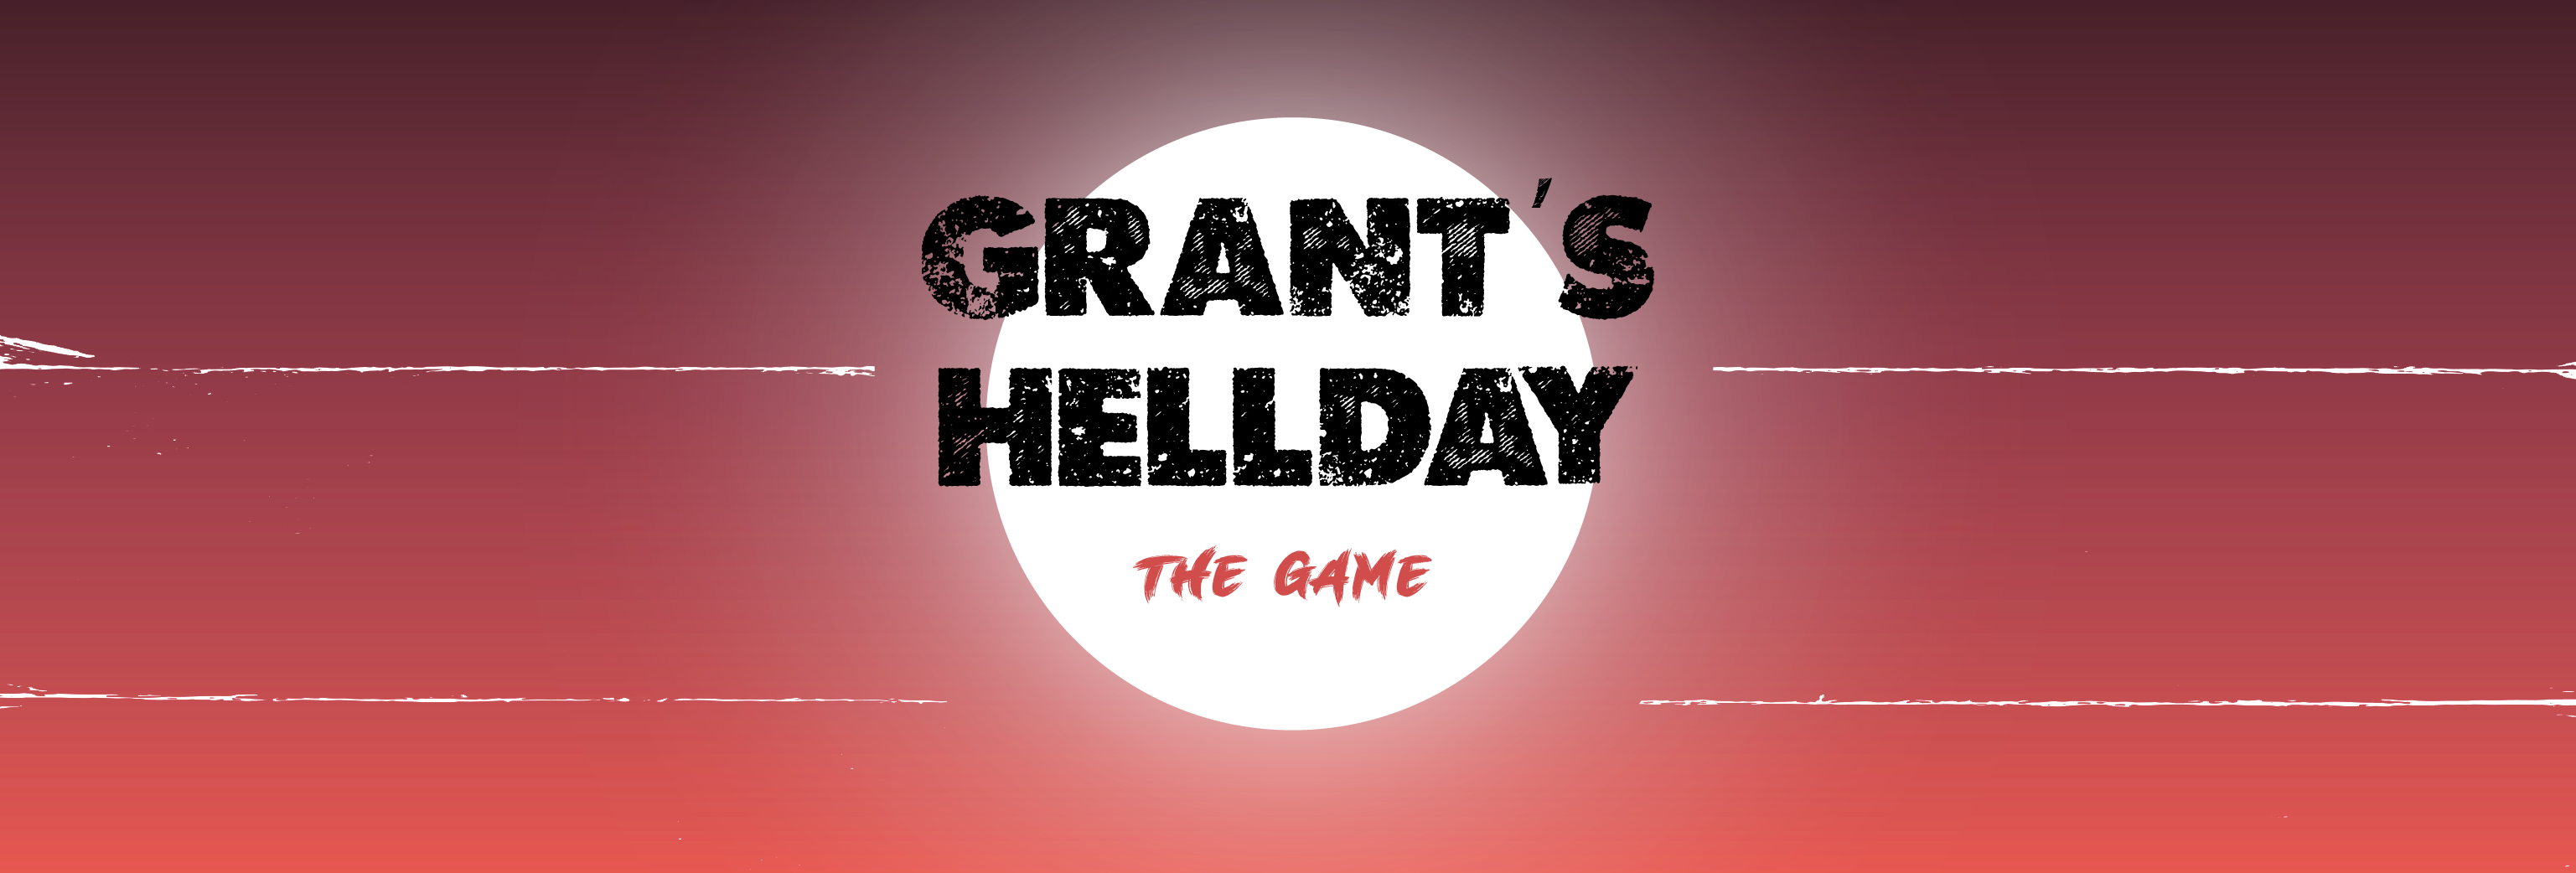 Grant's Hellday